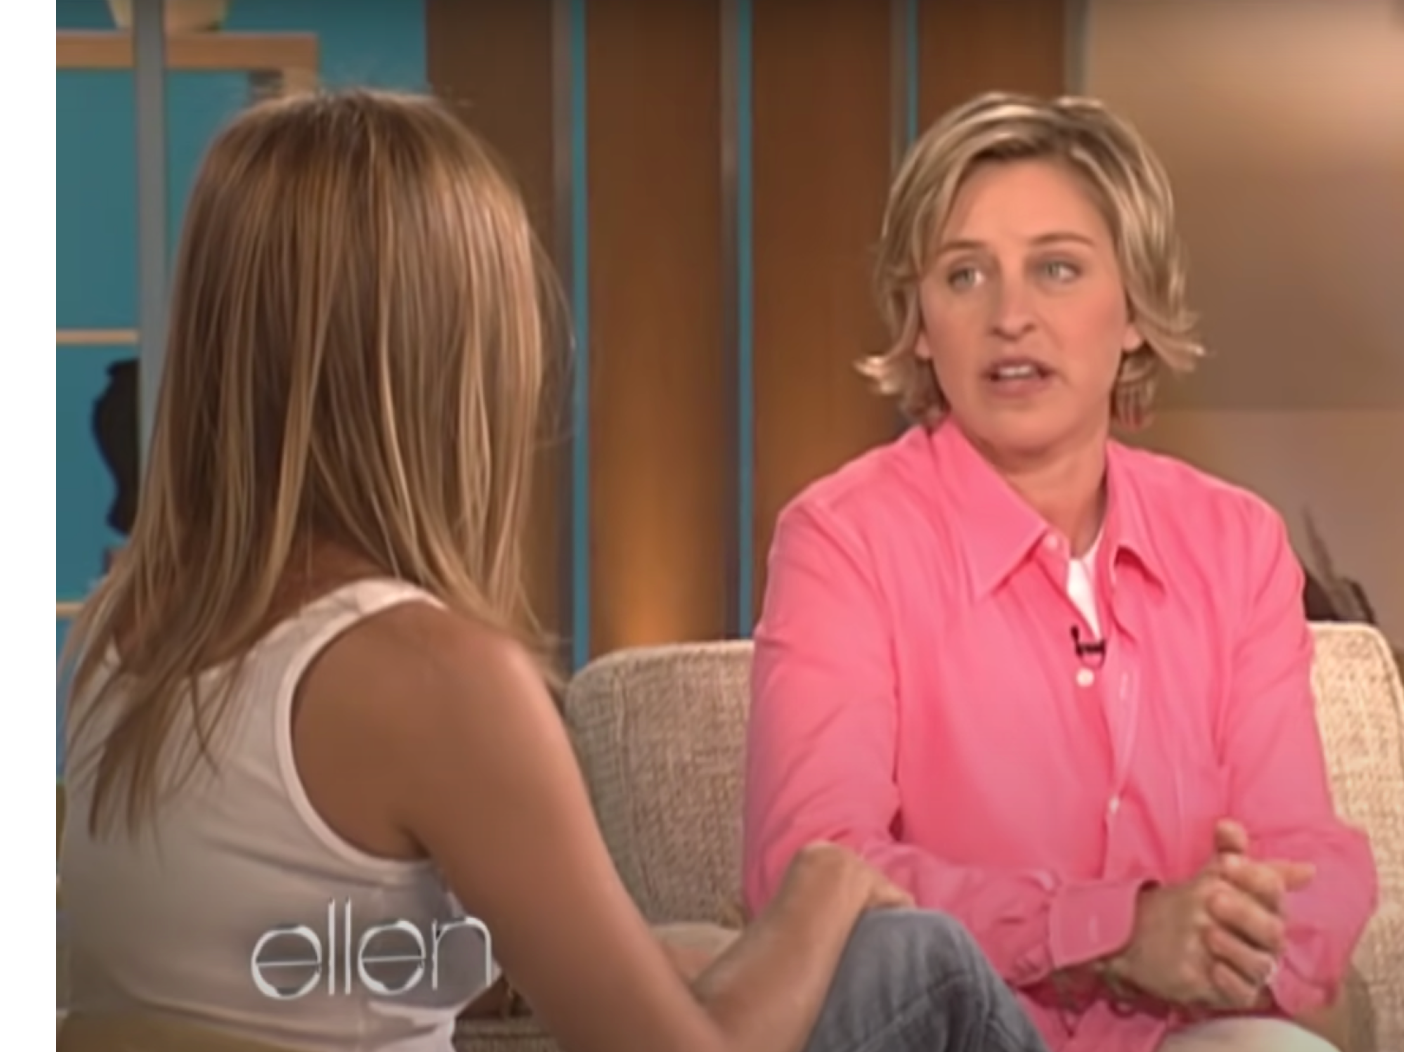 Could Ellen DeGeneres’ First Guest Also Be Her Final Guest?